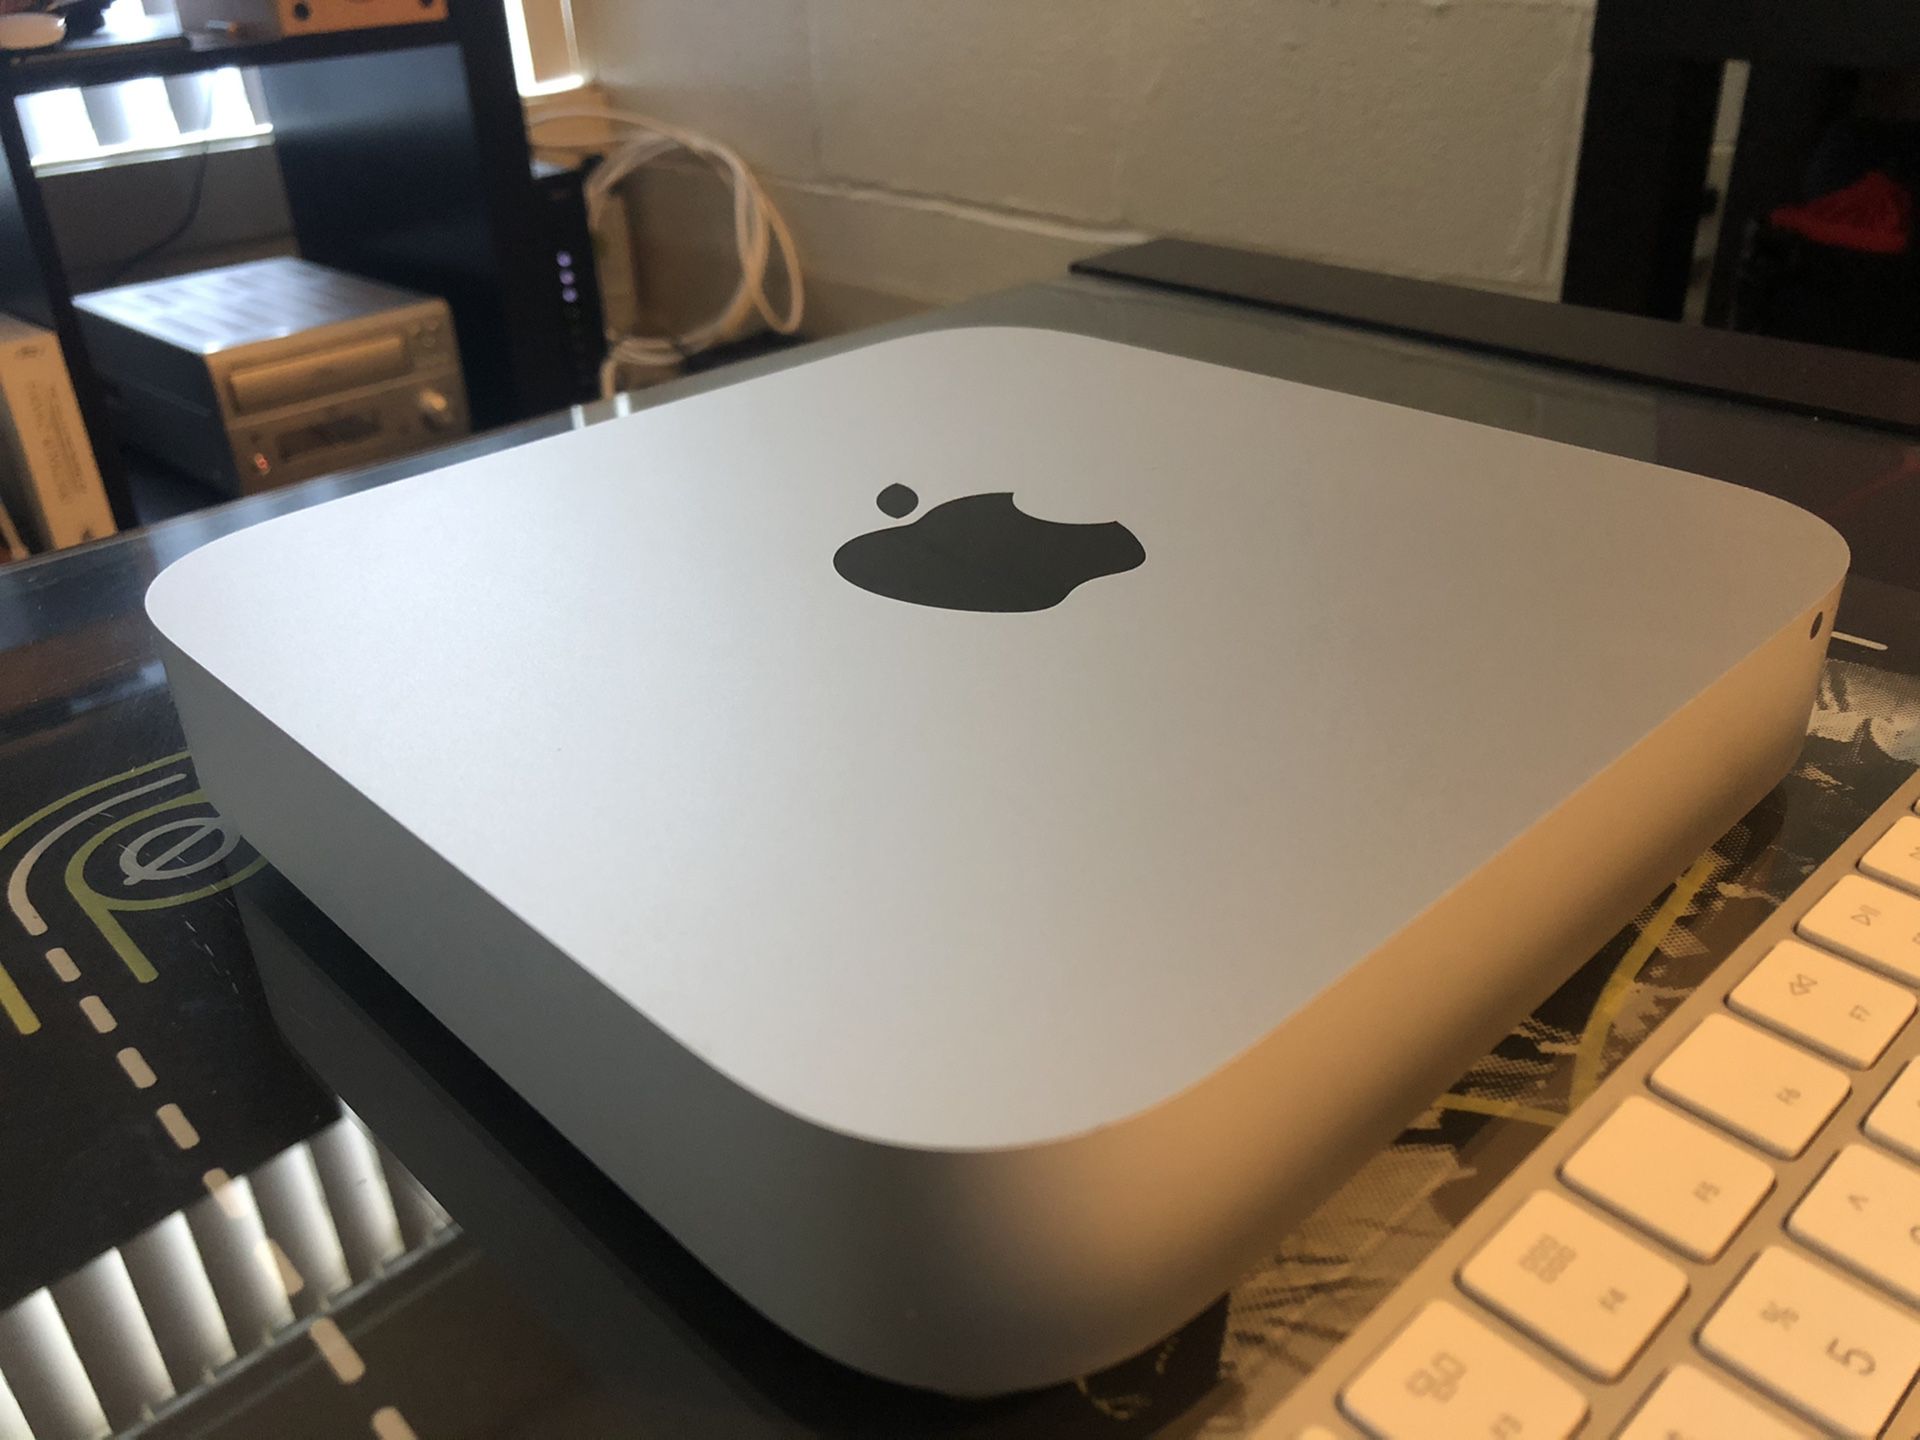 Mac Mini + Keyboard + Magic Track Pad